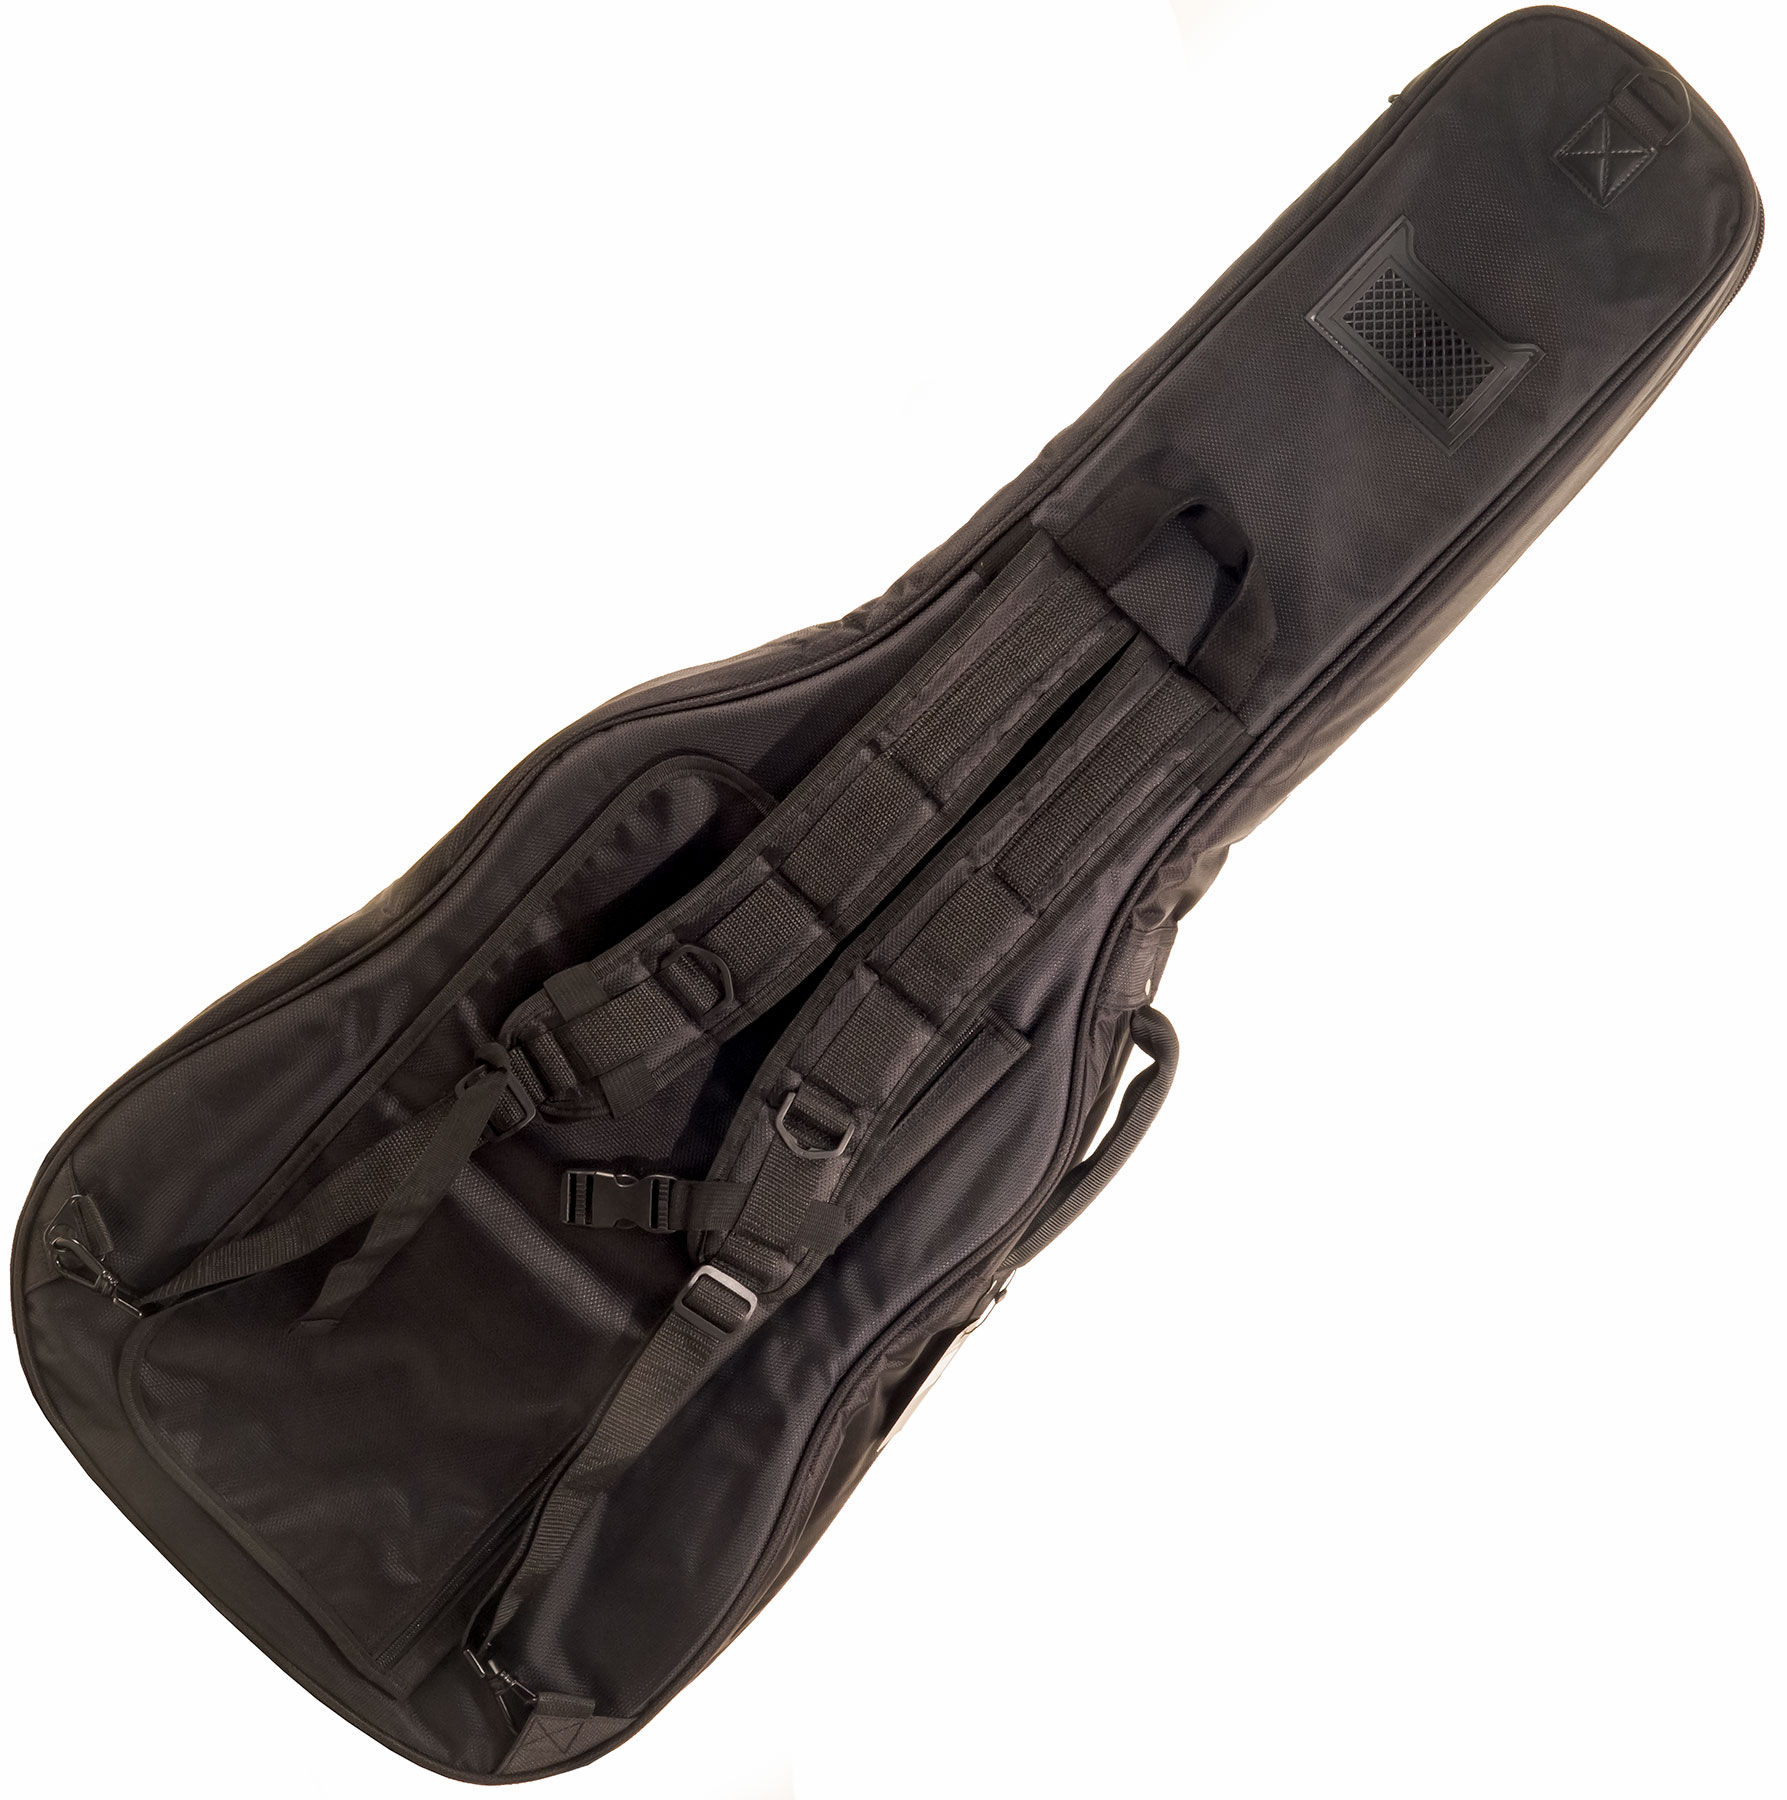 X-tone 2020 Ele-bk Light Deluxe Electric Guitar Bag Black (2083) - Tasche für E-Gitarren - Variation 1